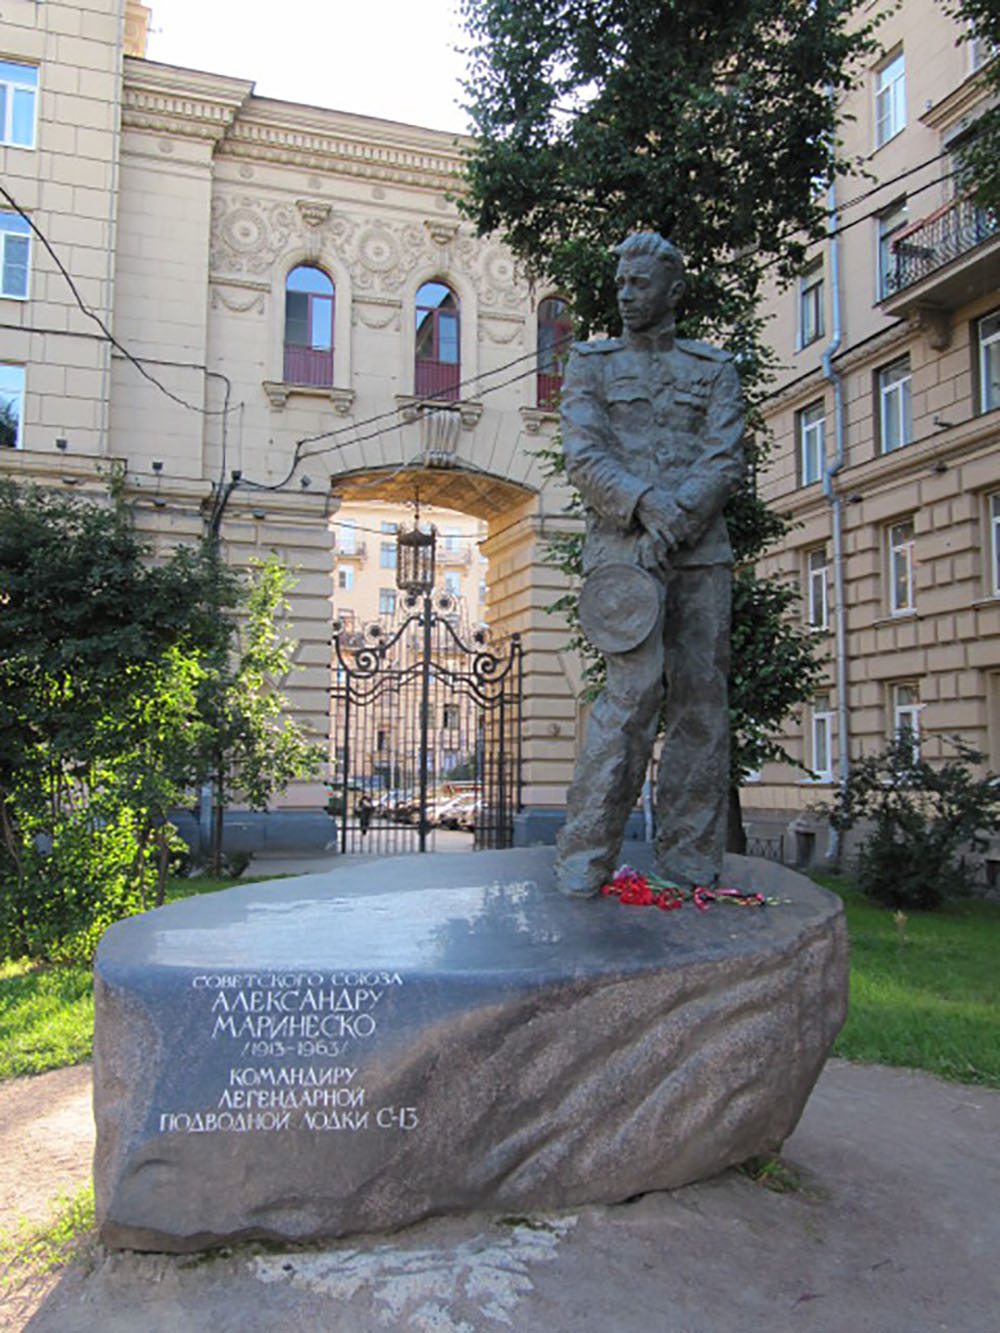 Memorial Alexander Marinesko